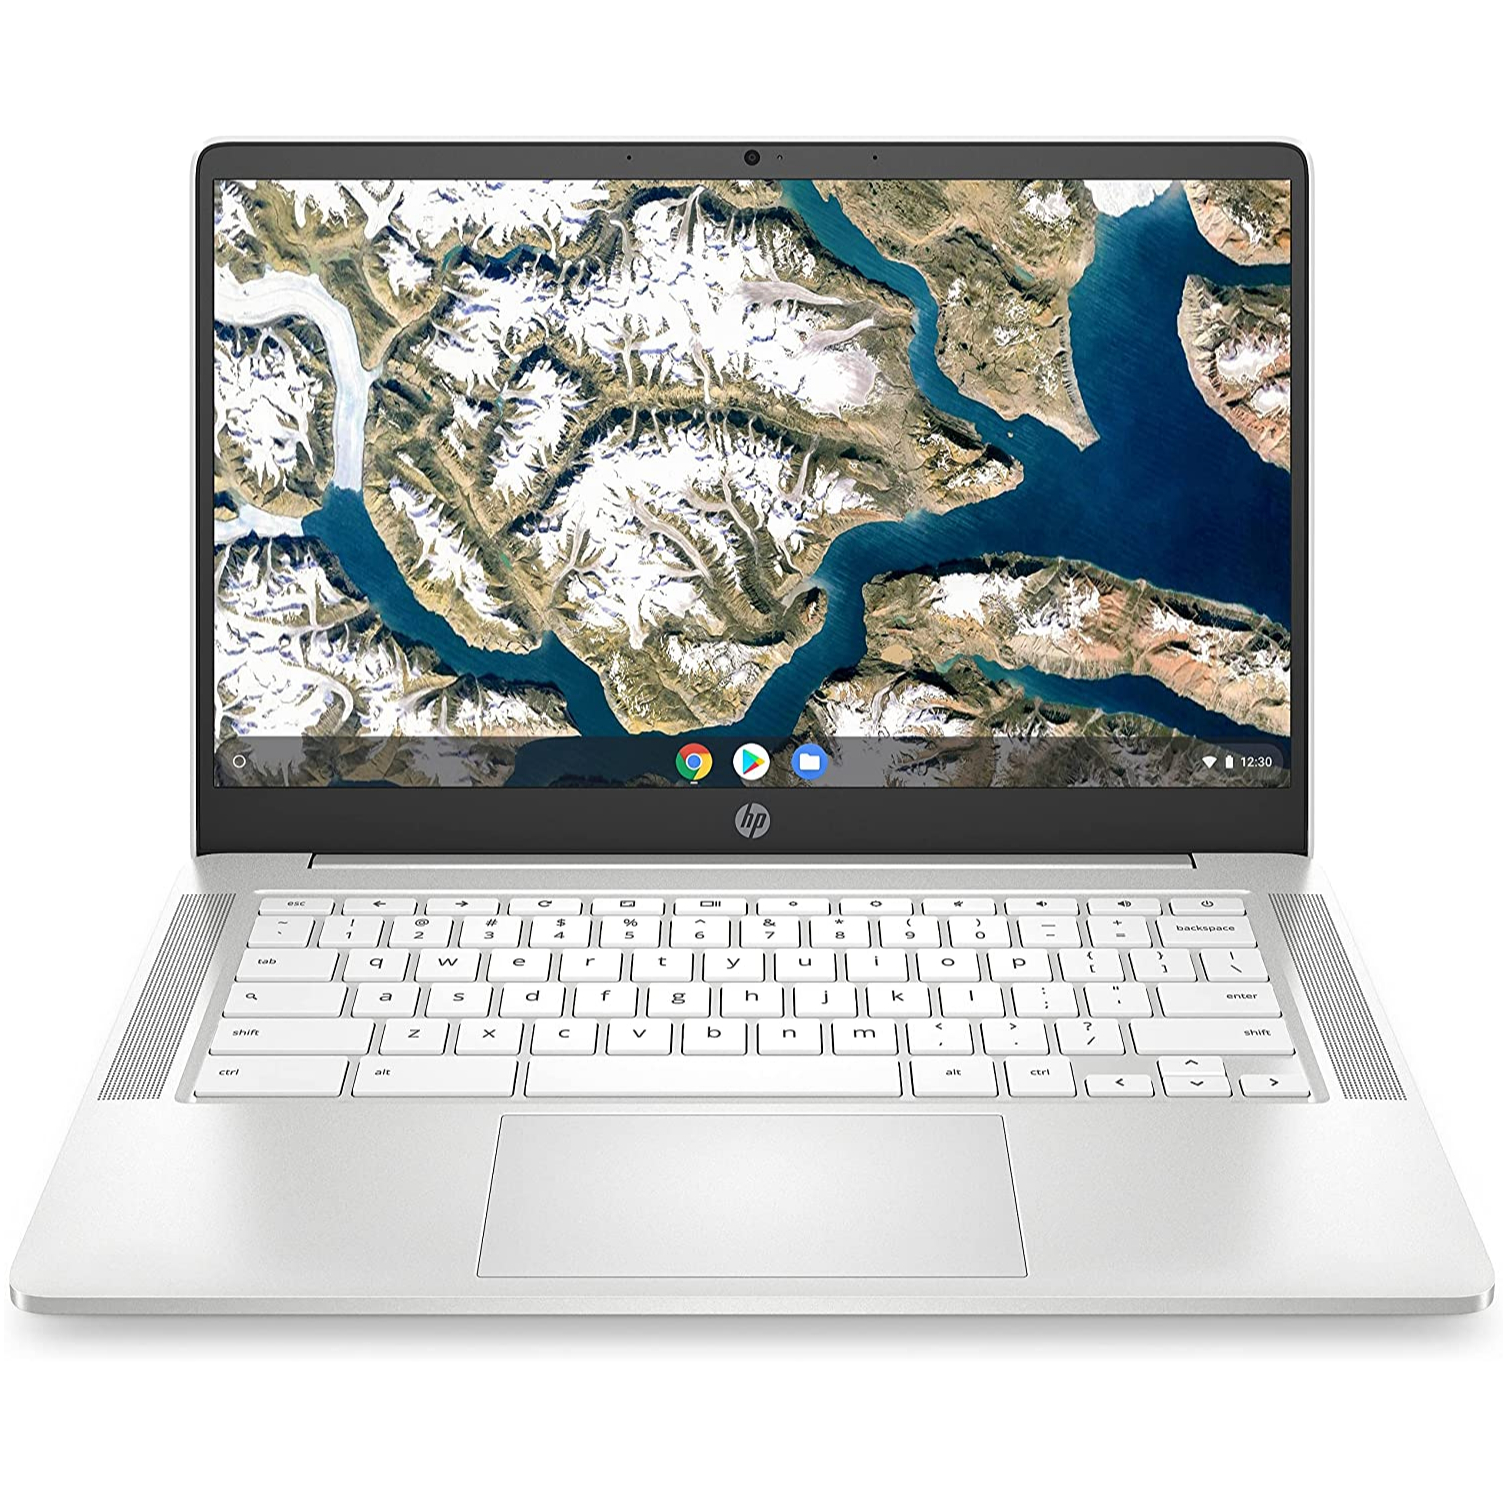 A HP Chromebook 14 against a white backdrop